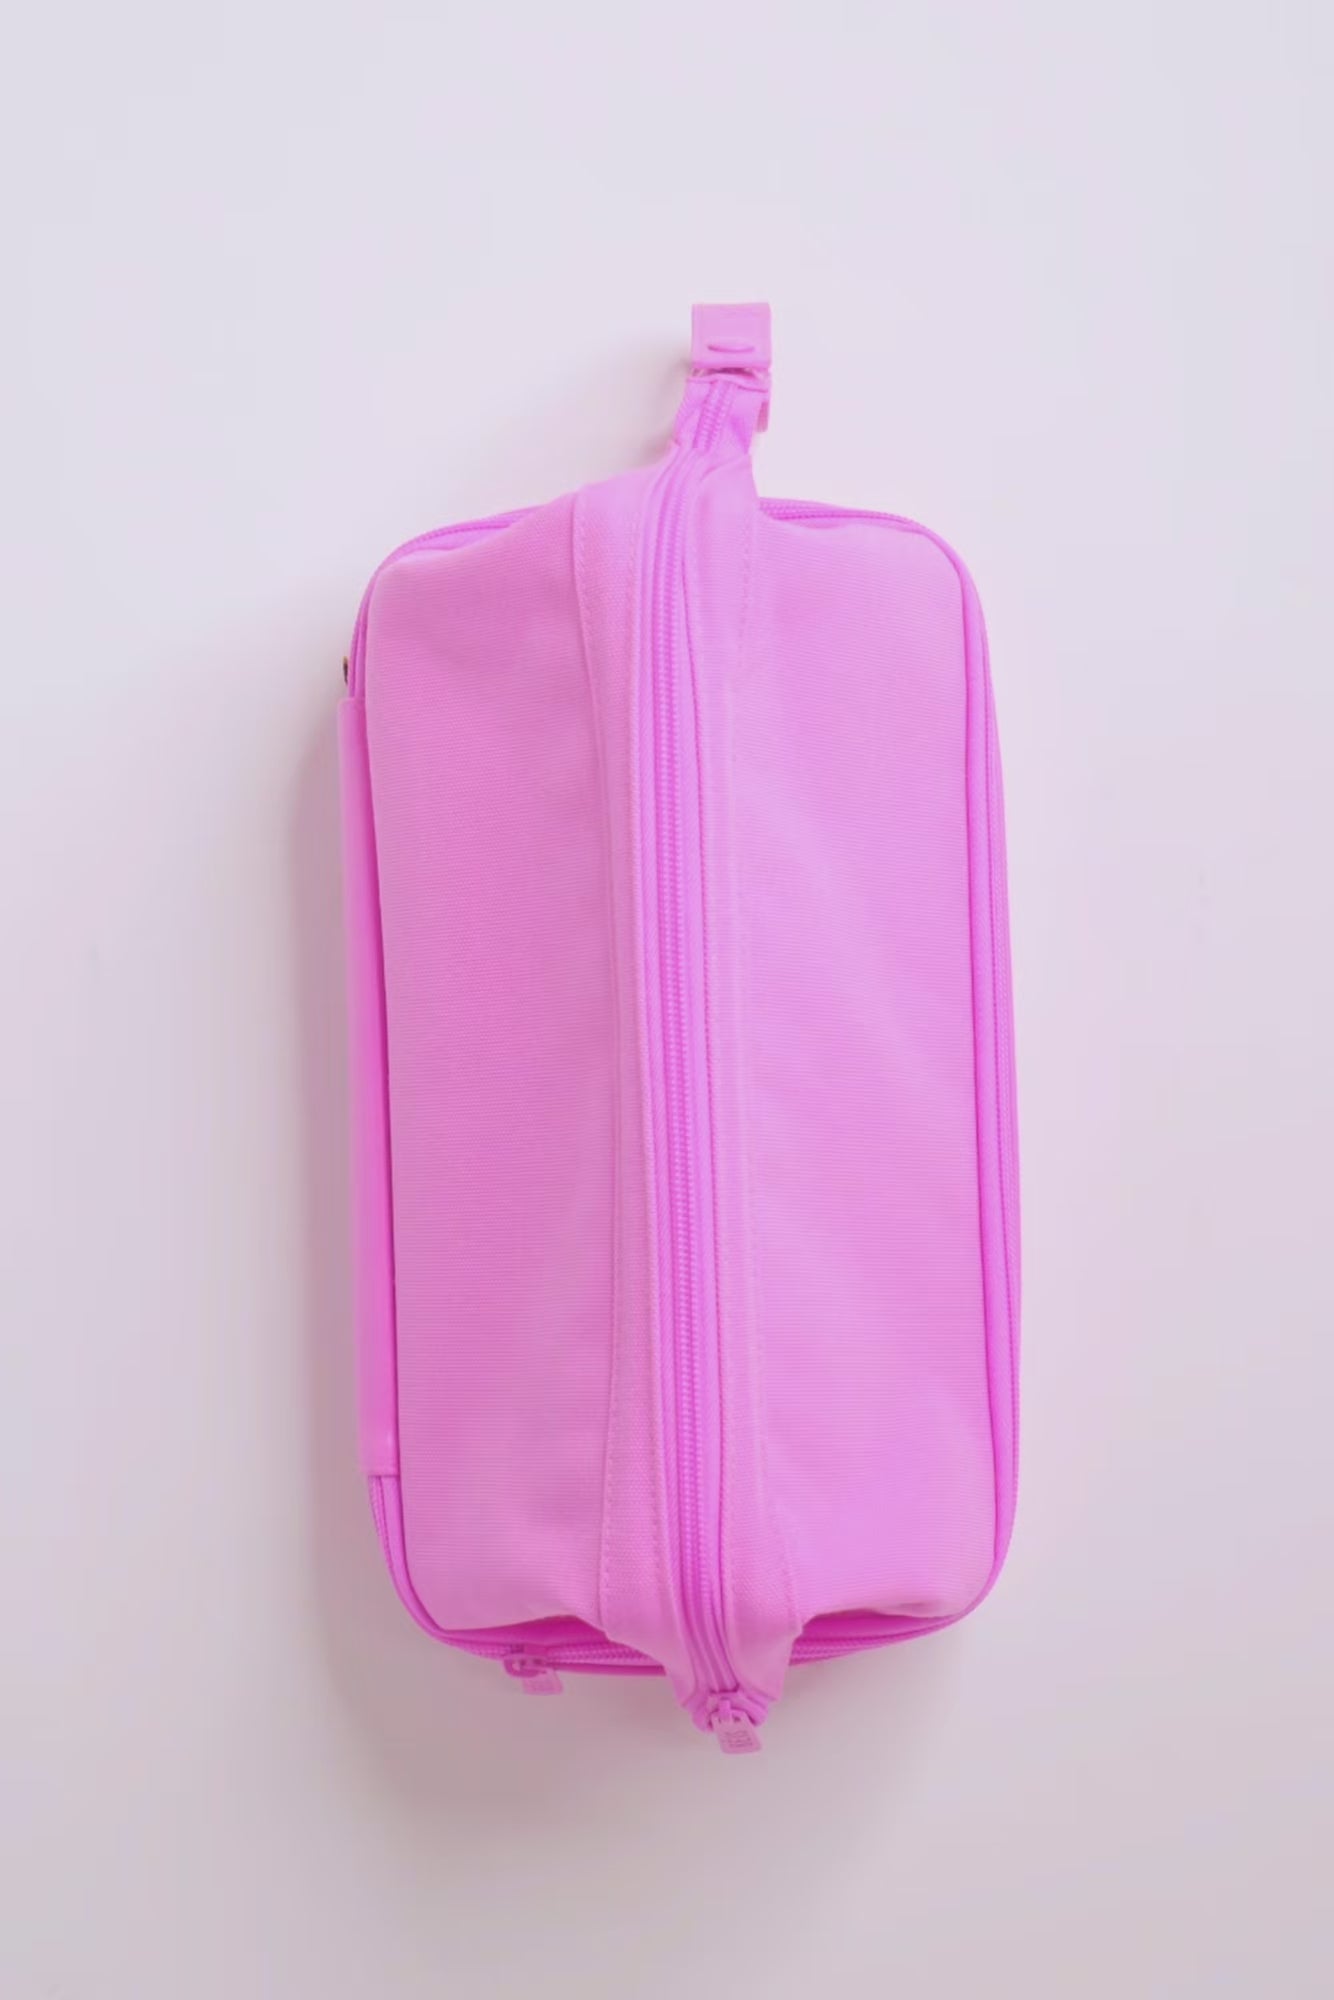 BÉIS 'The Dopp Kit' In Berry - Purple Travel Toiletry Bag & Toiletry Kit